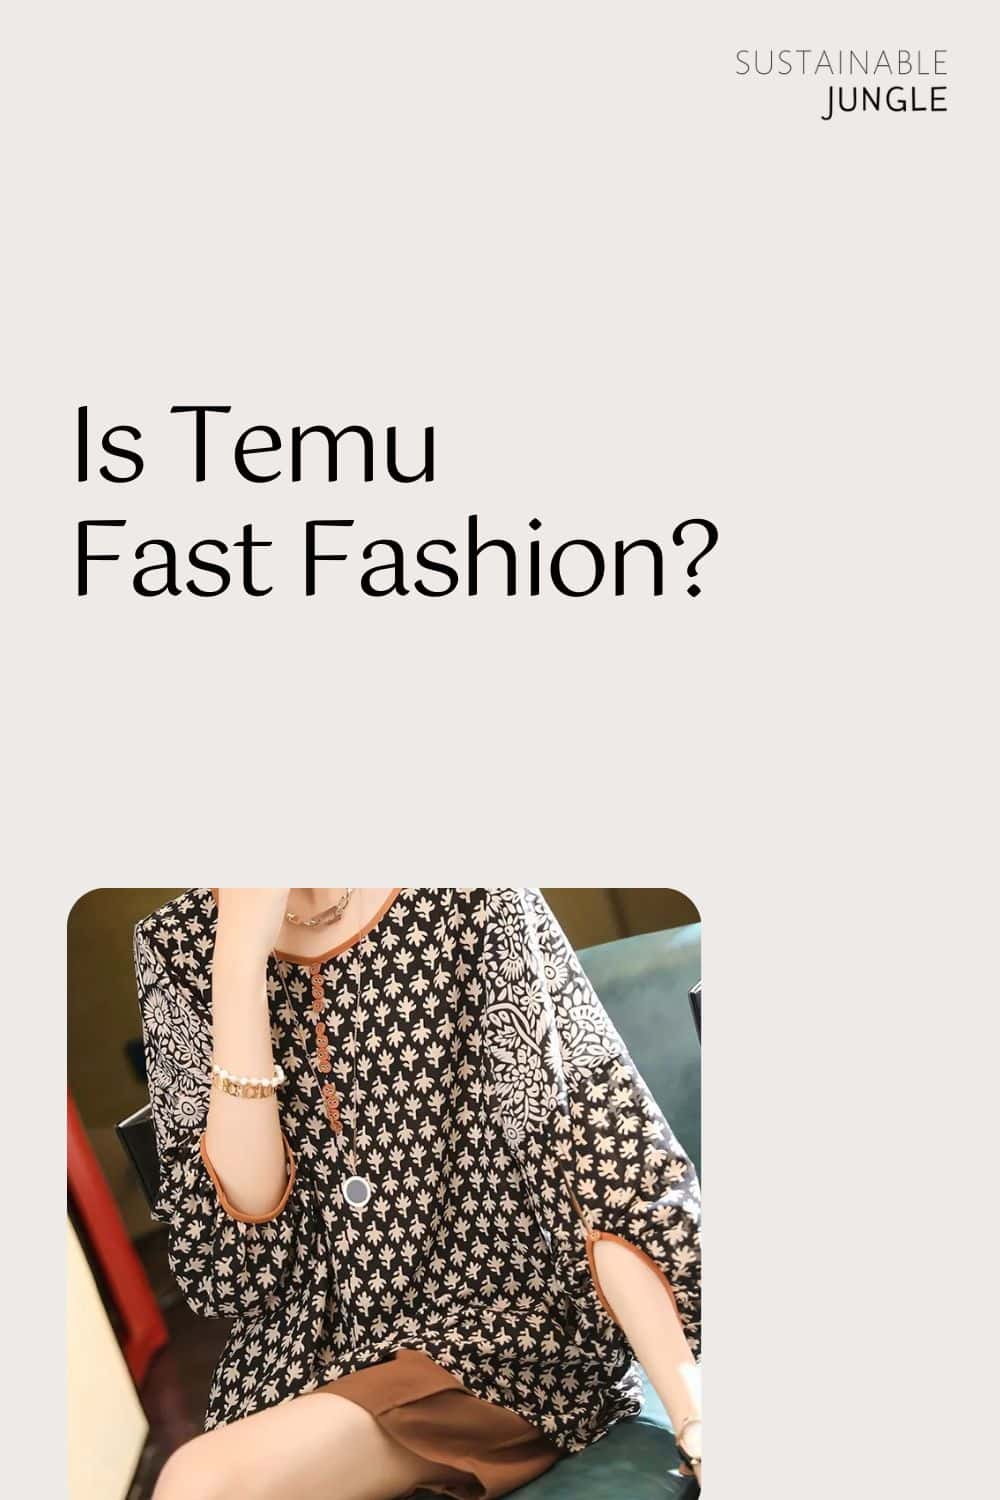 Is Temu Fast Fashion? Image by Temu #istemufastfashion #istemuethical #istemubad #istemulegit #howethicalistemu #temucontroversy #sustainablejungle